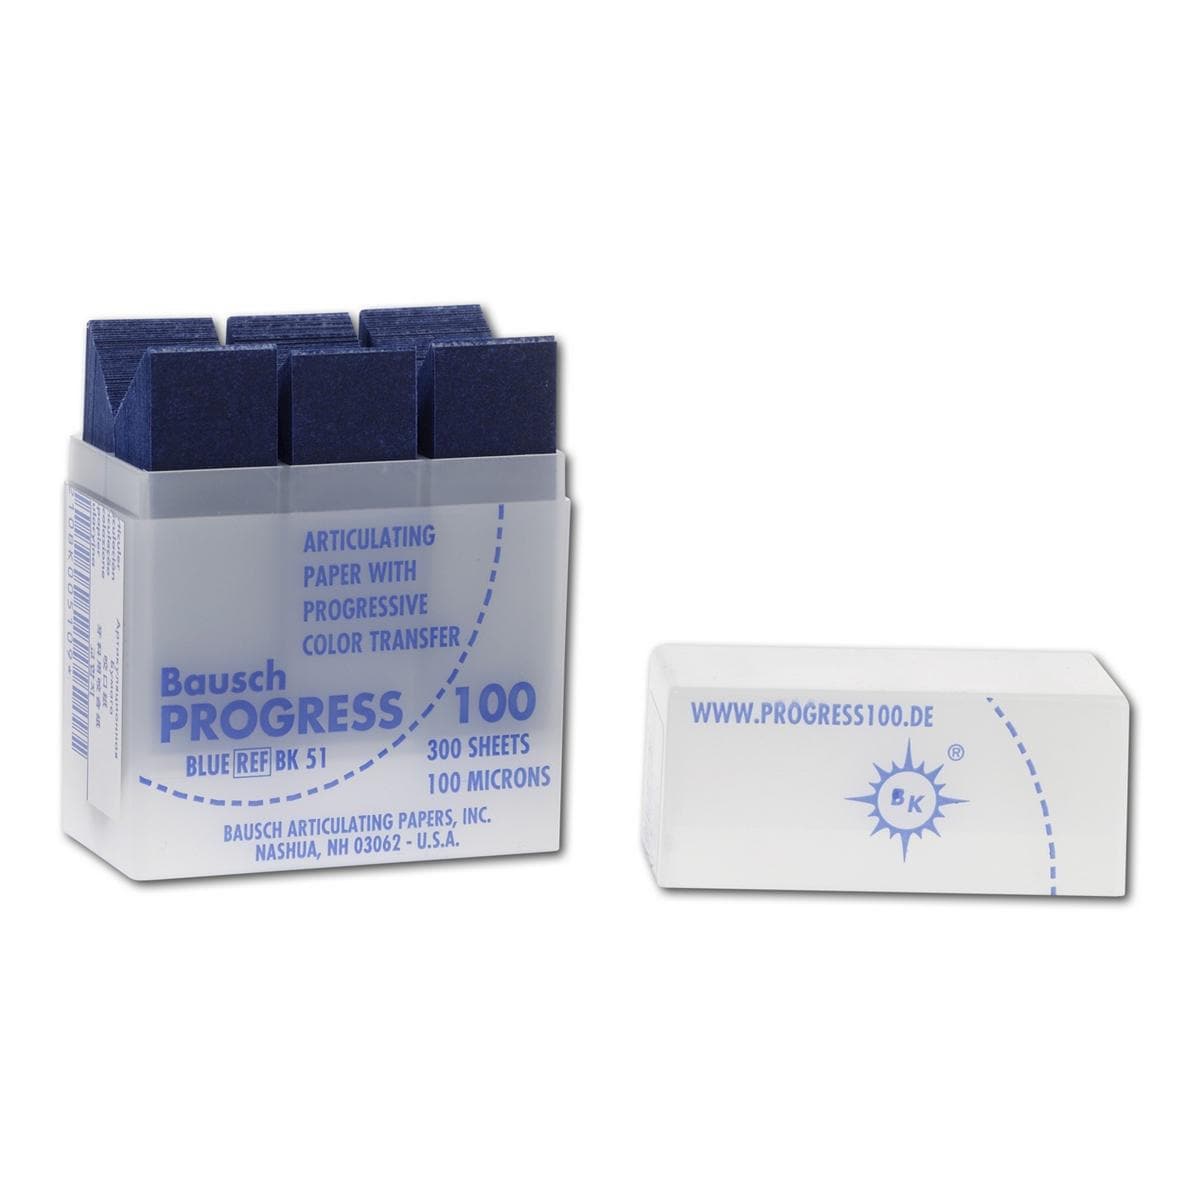 Bausch Progress 100® - BK 51, blau, Plastik-Kassette 300 Blatt